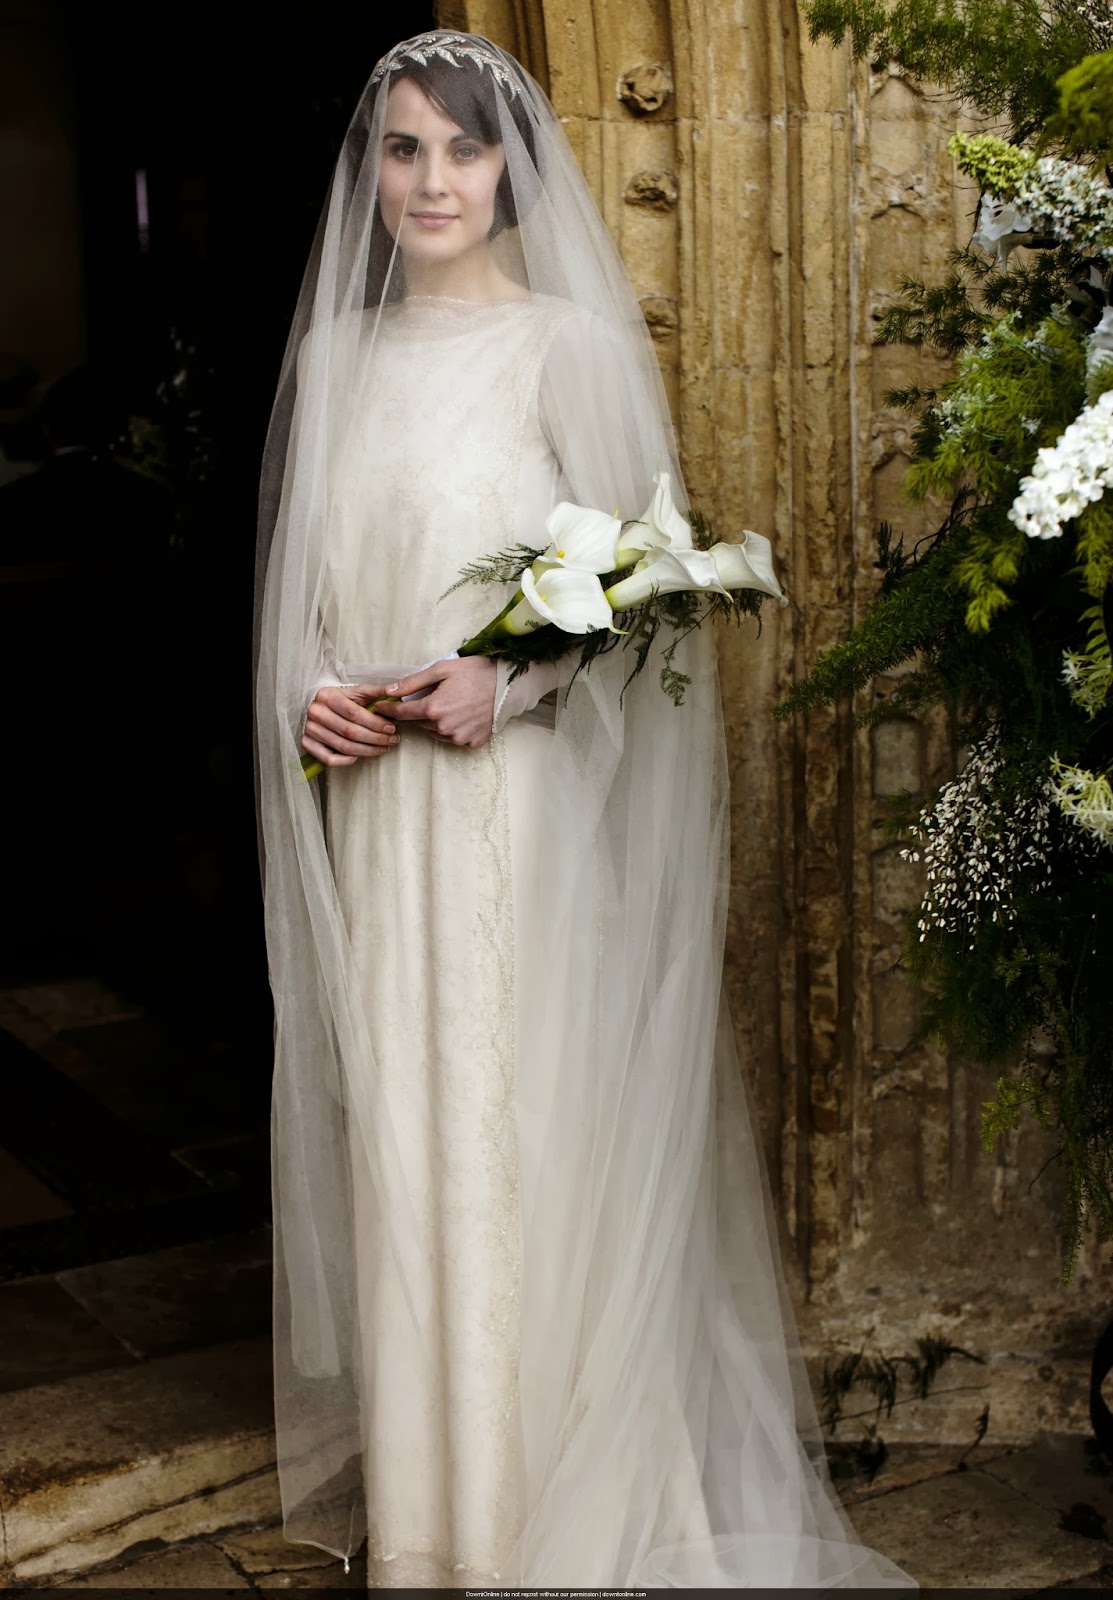 Downton Abbey’s Wedding | Cool Chic Style Fashion